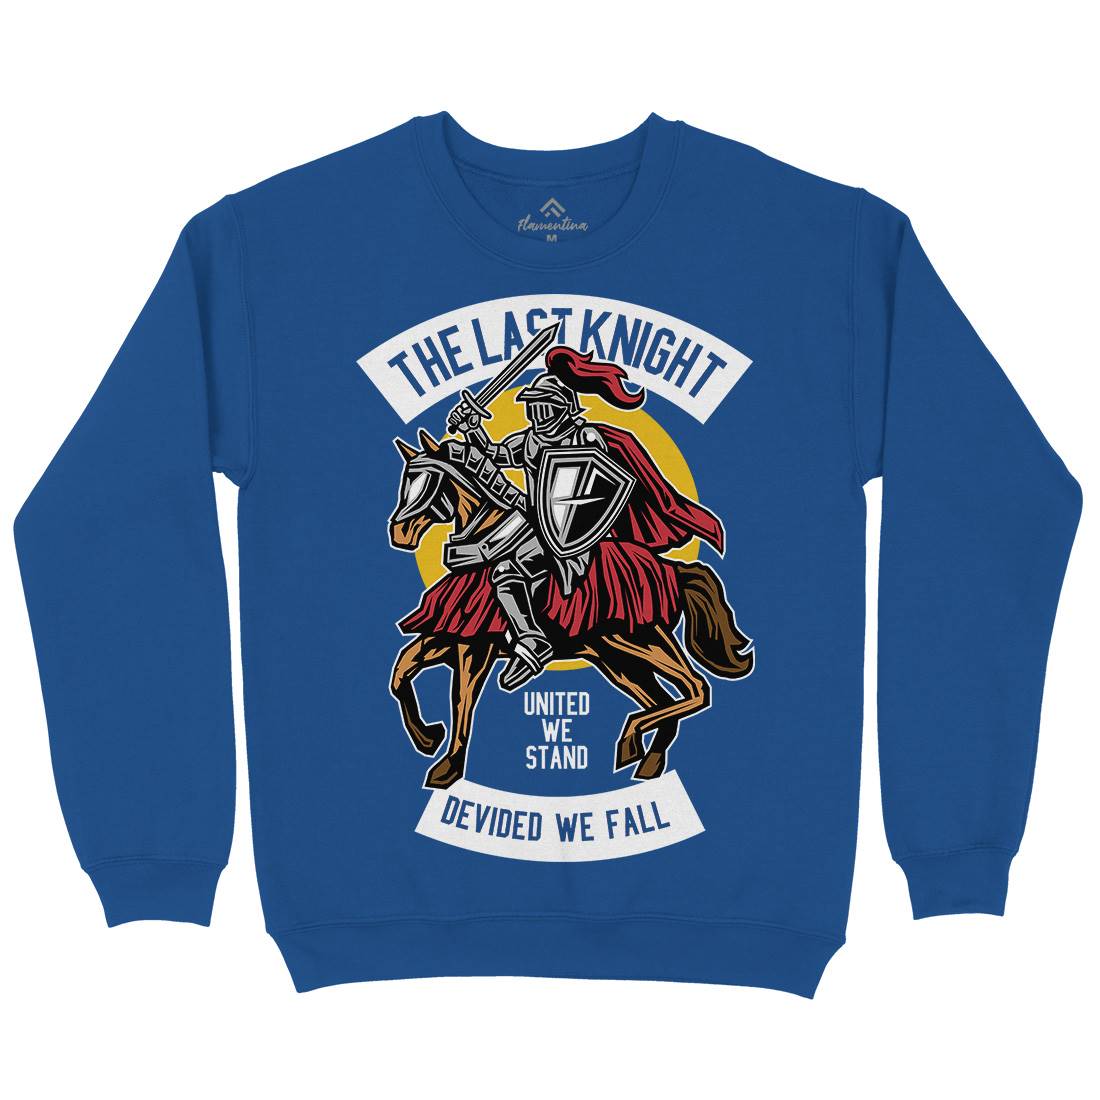 Last Knight Kids Crew Neck Sweatshirt Warriors D590